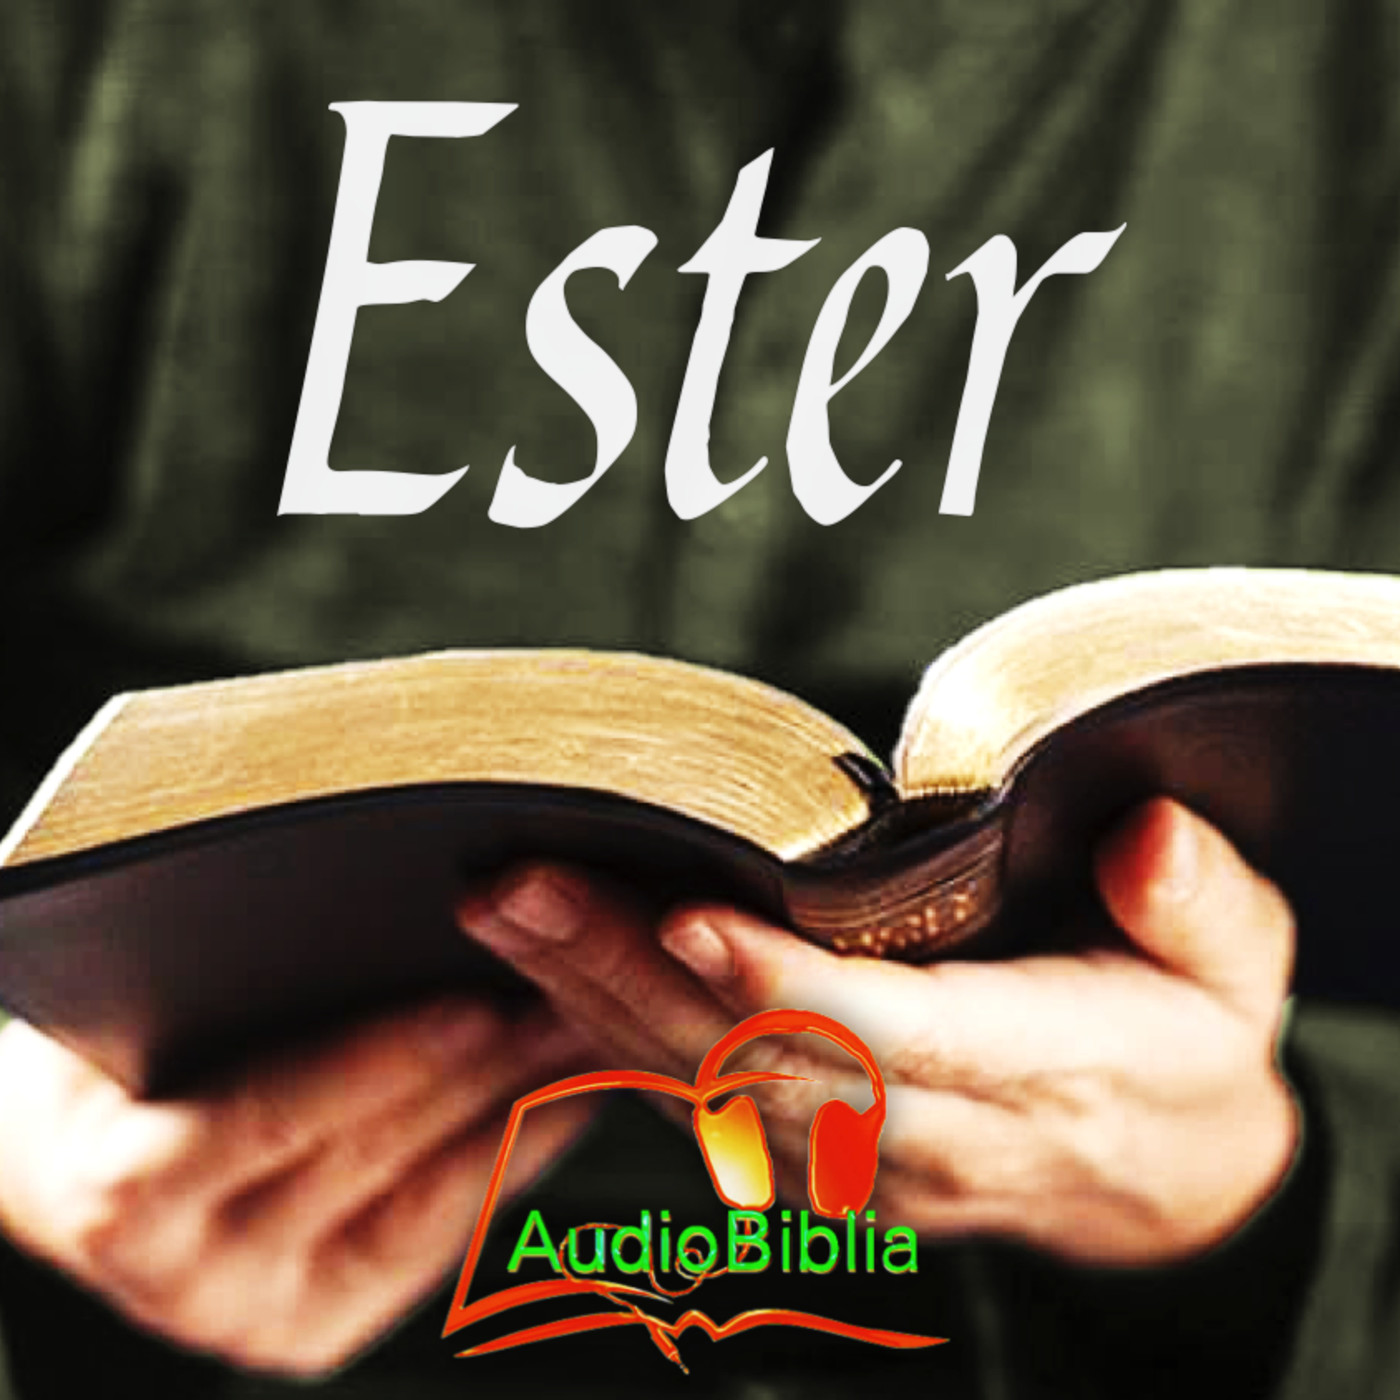 AT-17 Libro de Esther, AudioBiblia